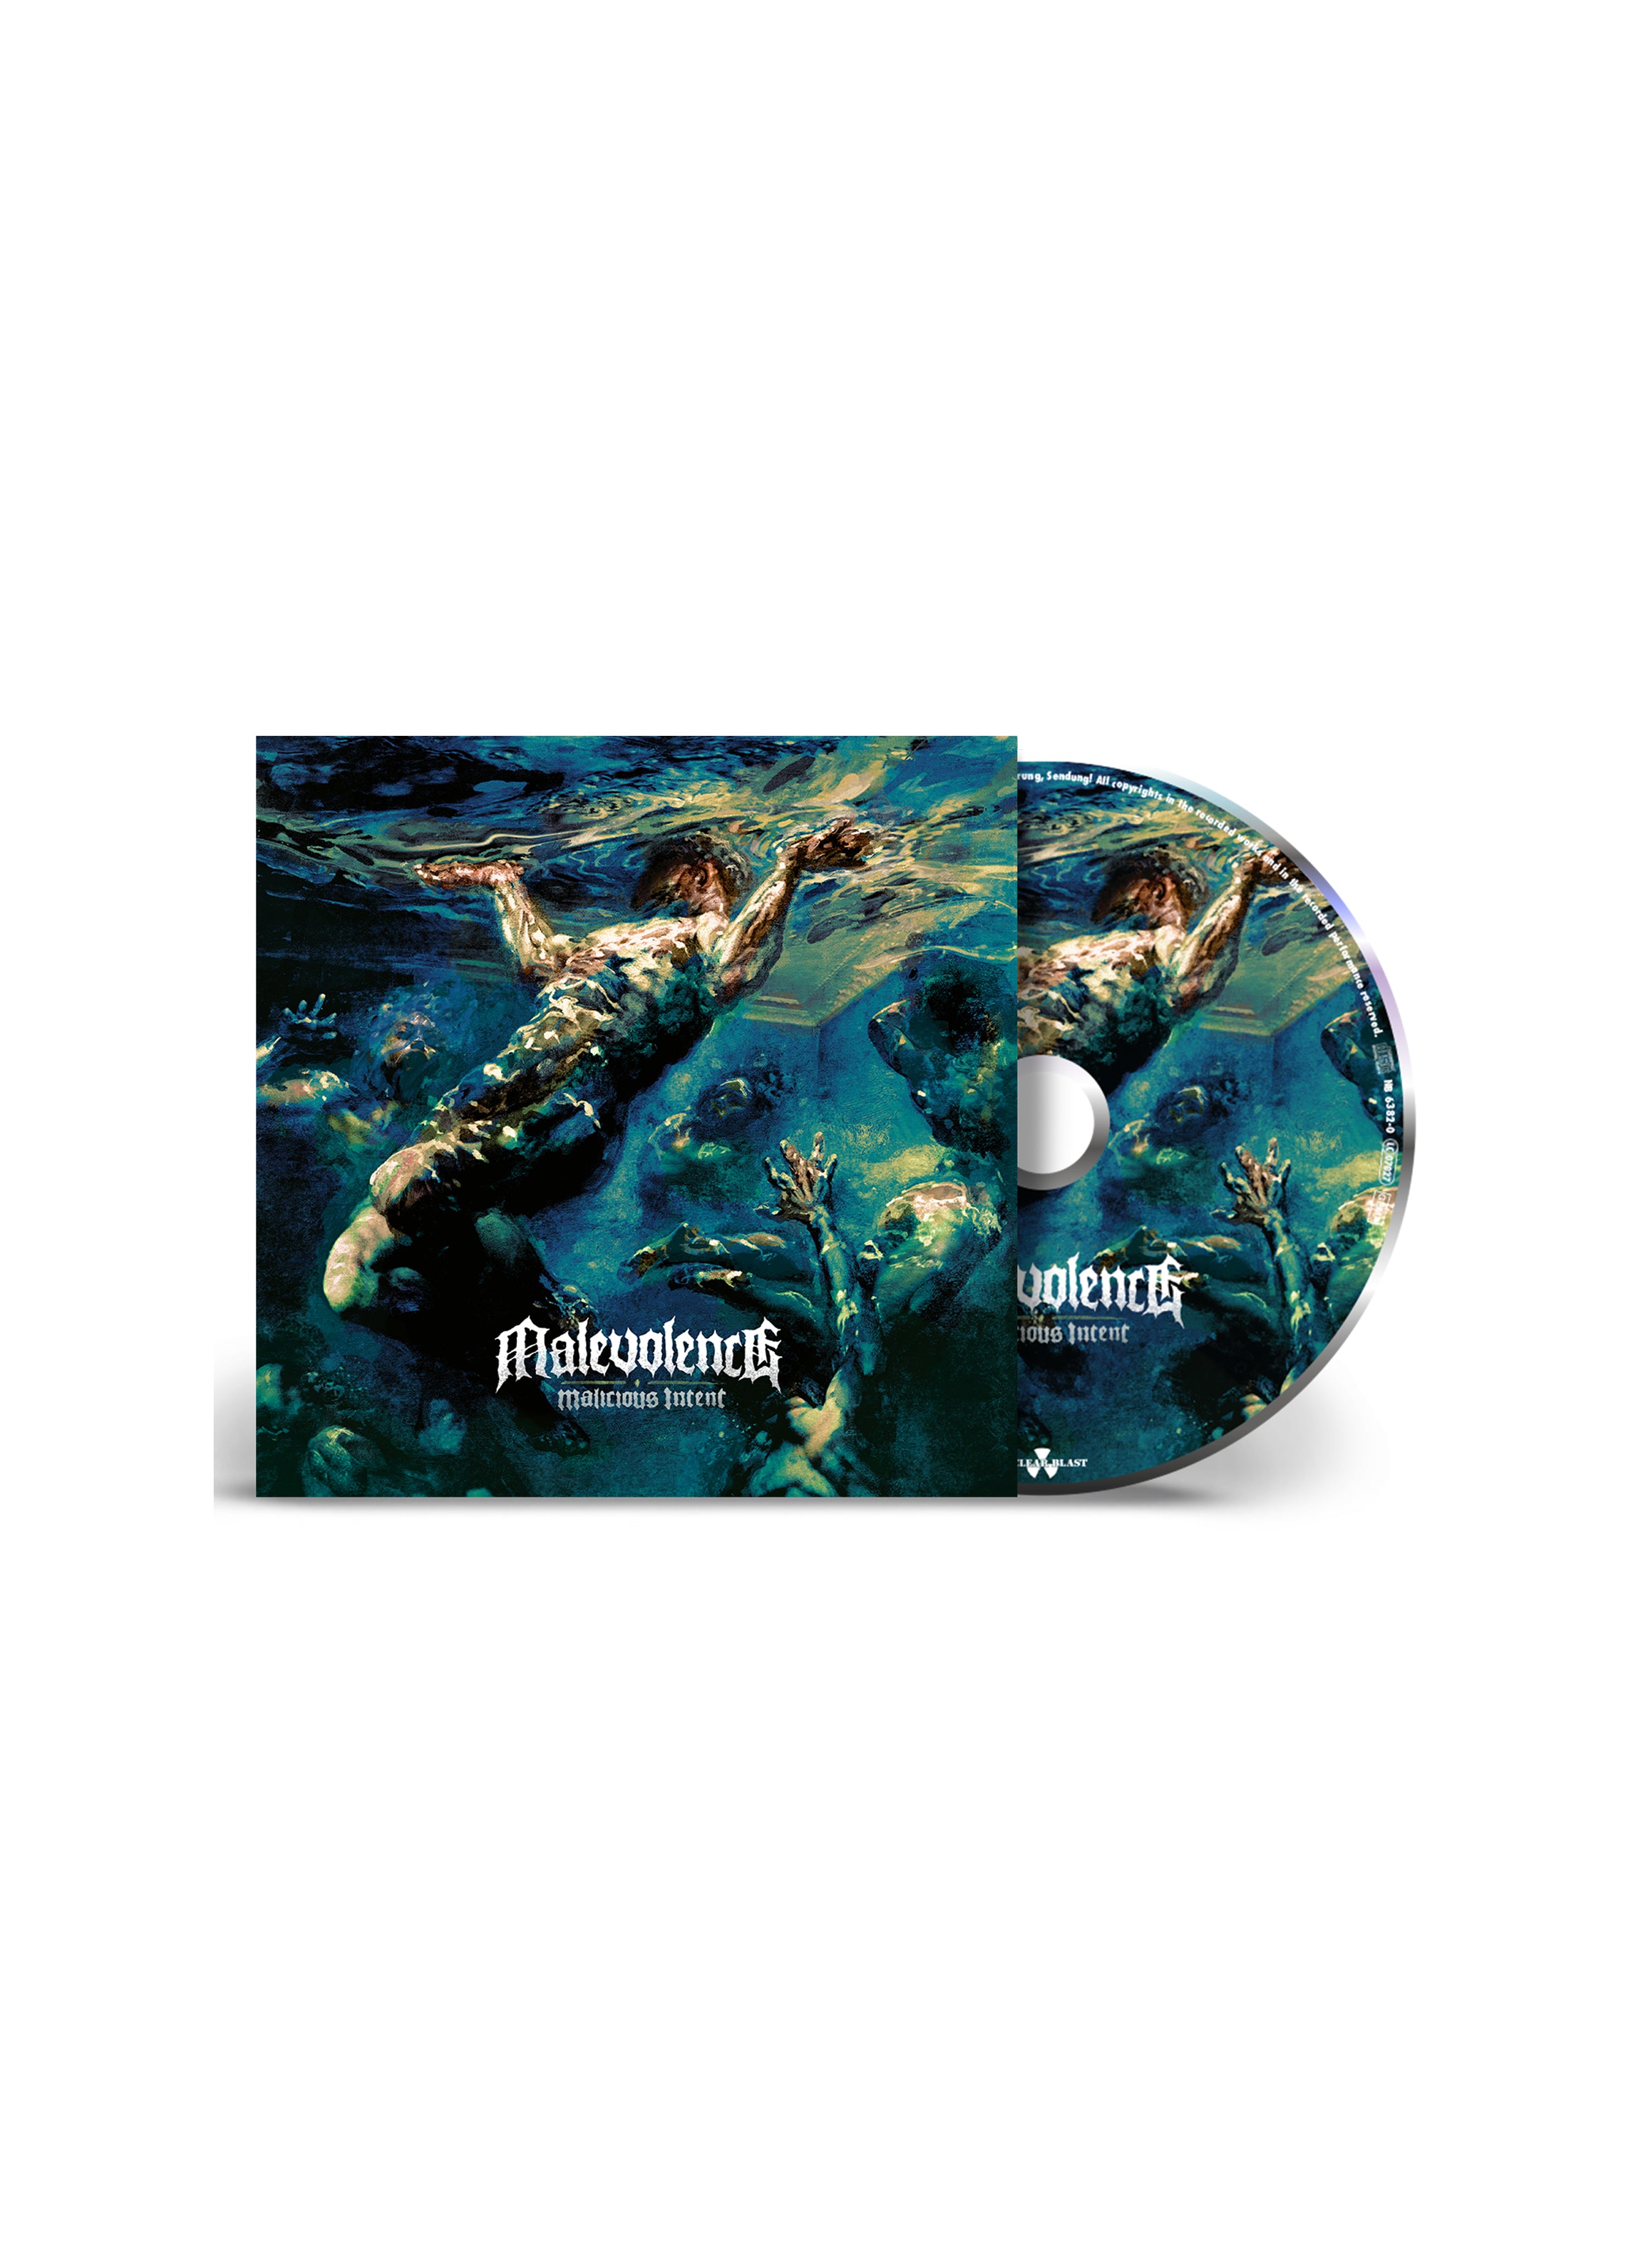 Malevolence - Malicious Intent CD